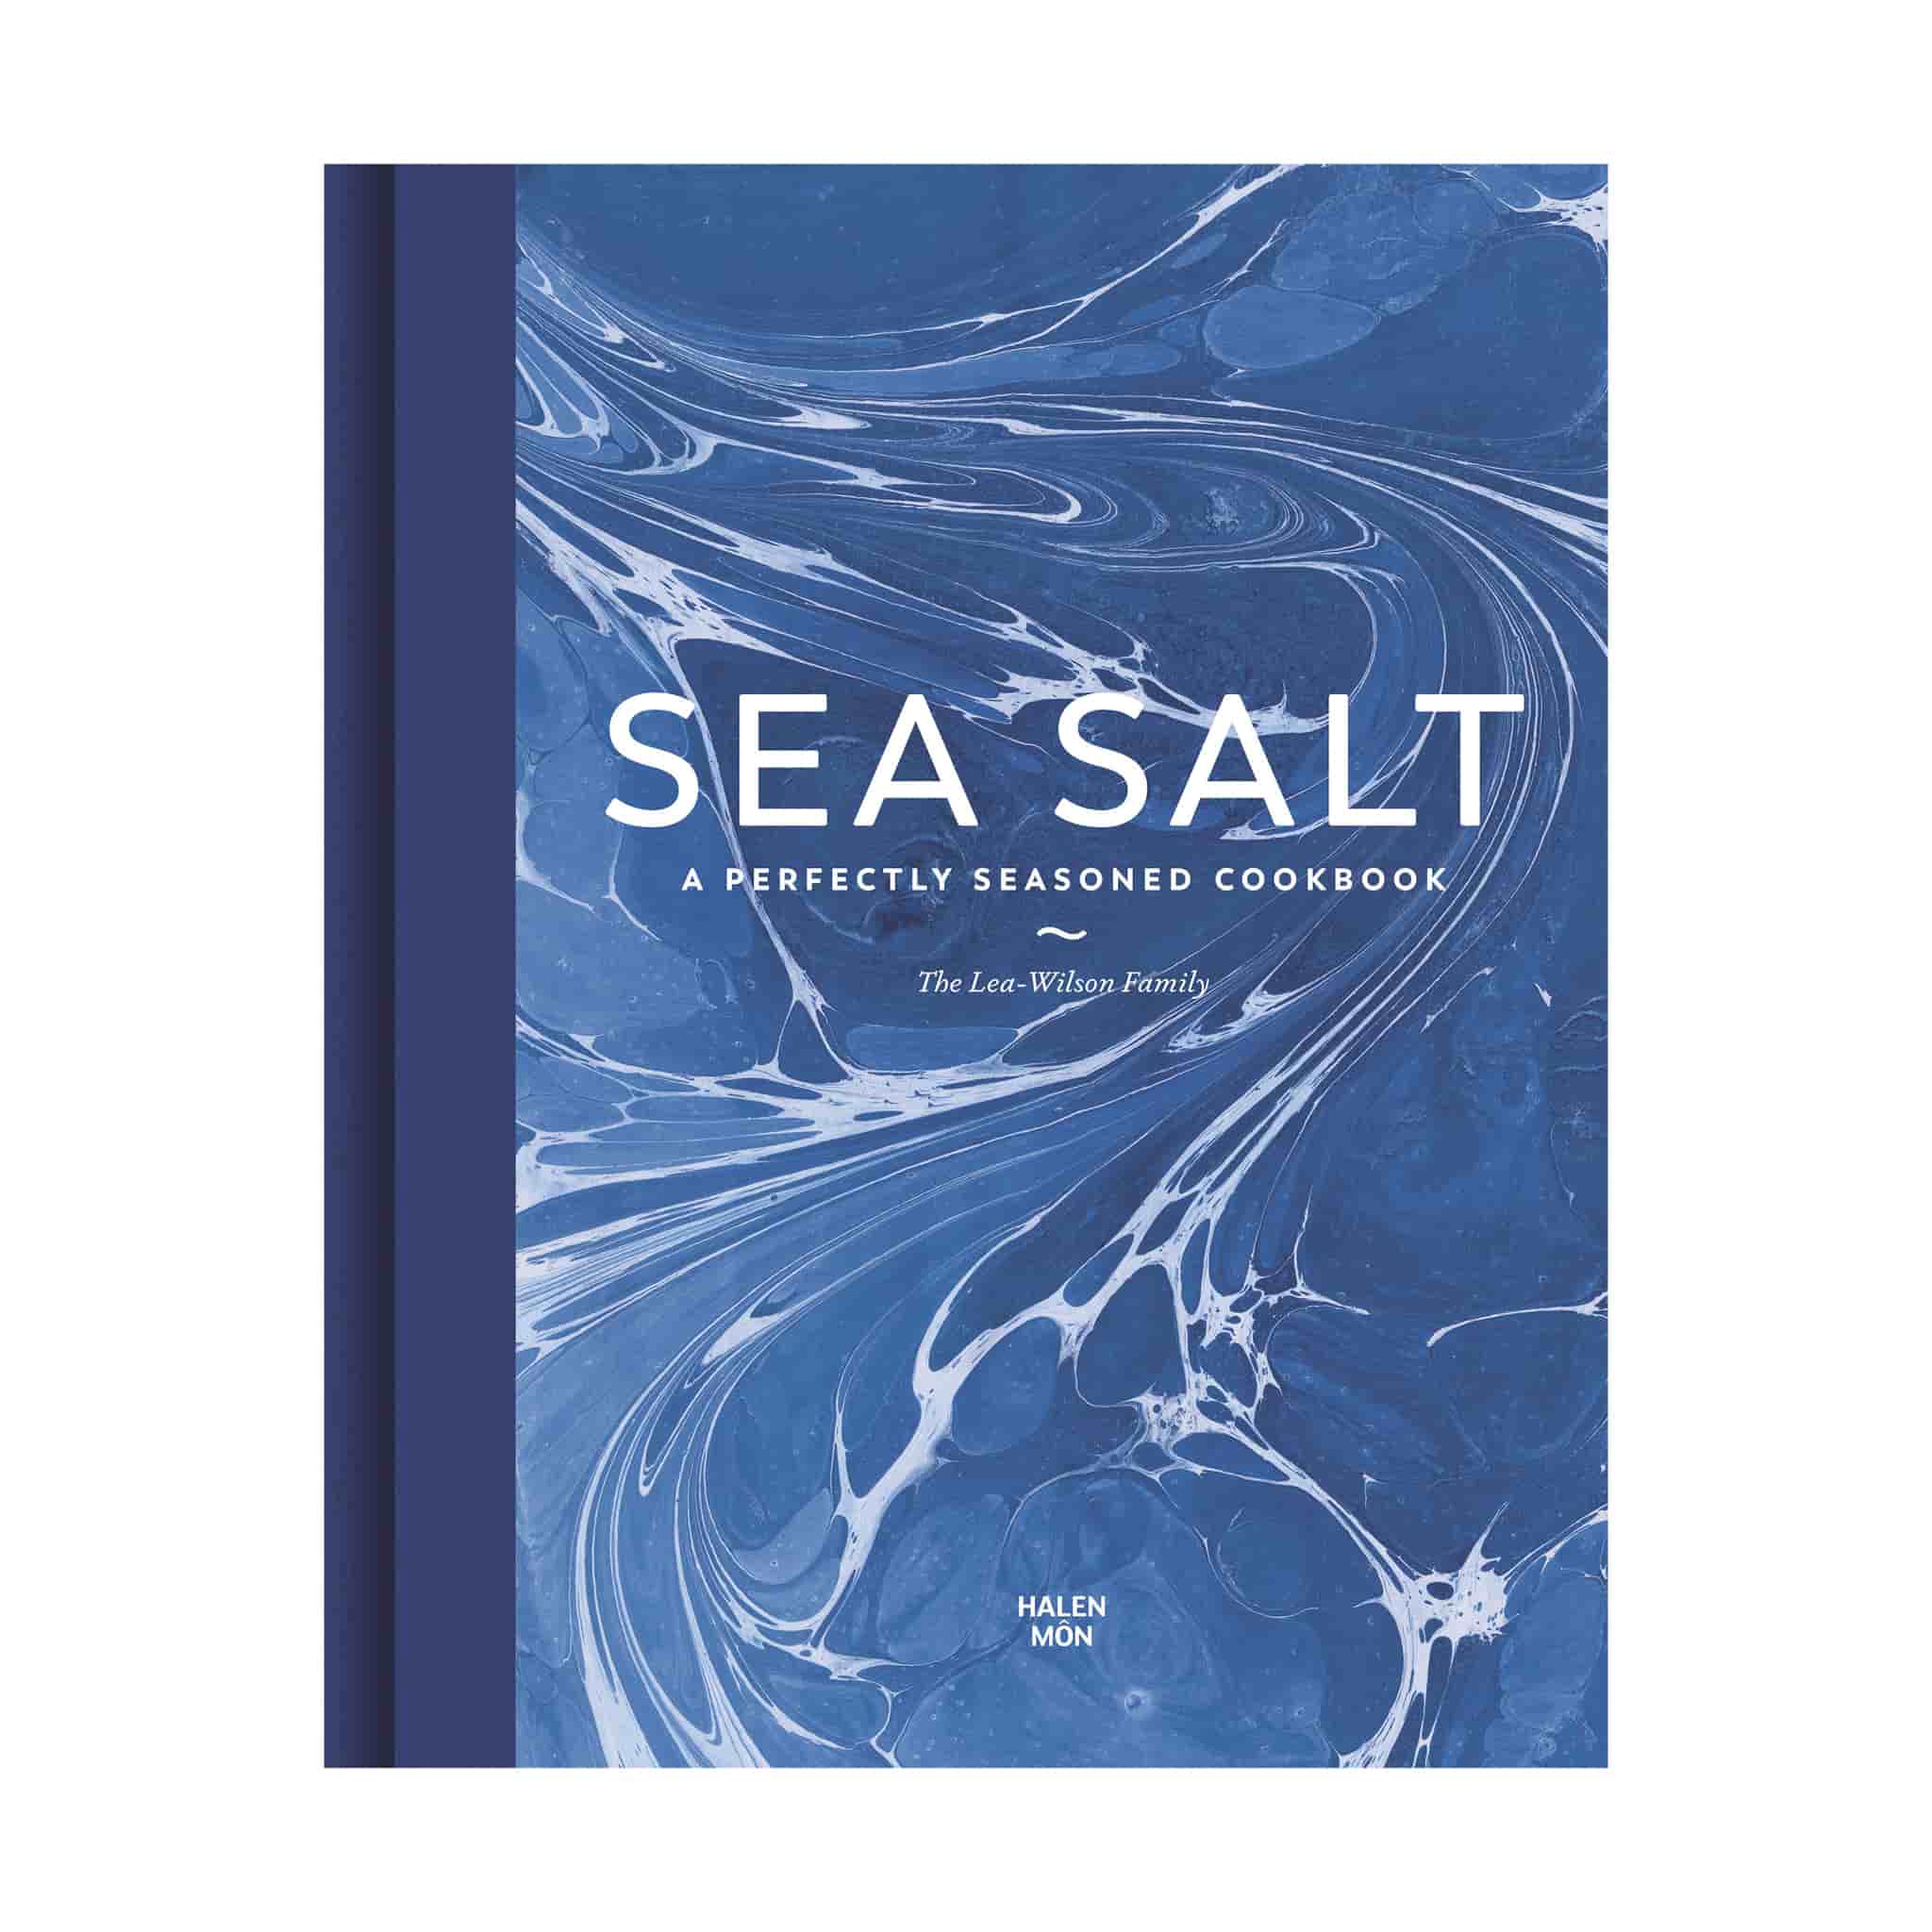 Sea Salt: A Perfectly Seasoned Cookbook by The Lea-Wilson Family